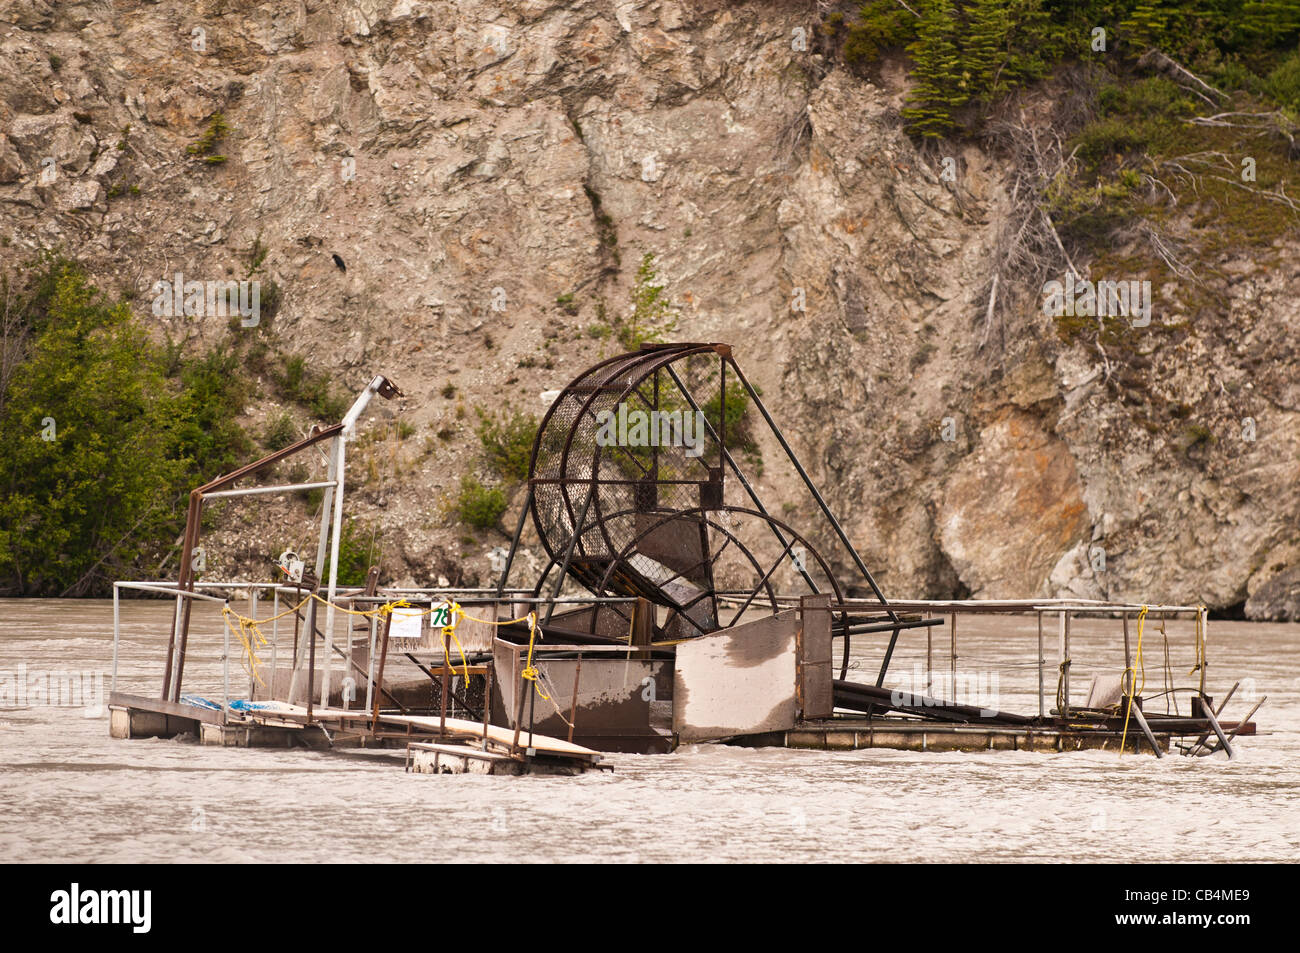 Salmon Wheel in the Copper River, Alaska Stock Photo - Alamy